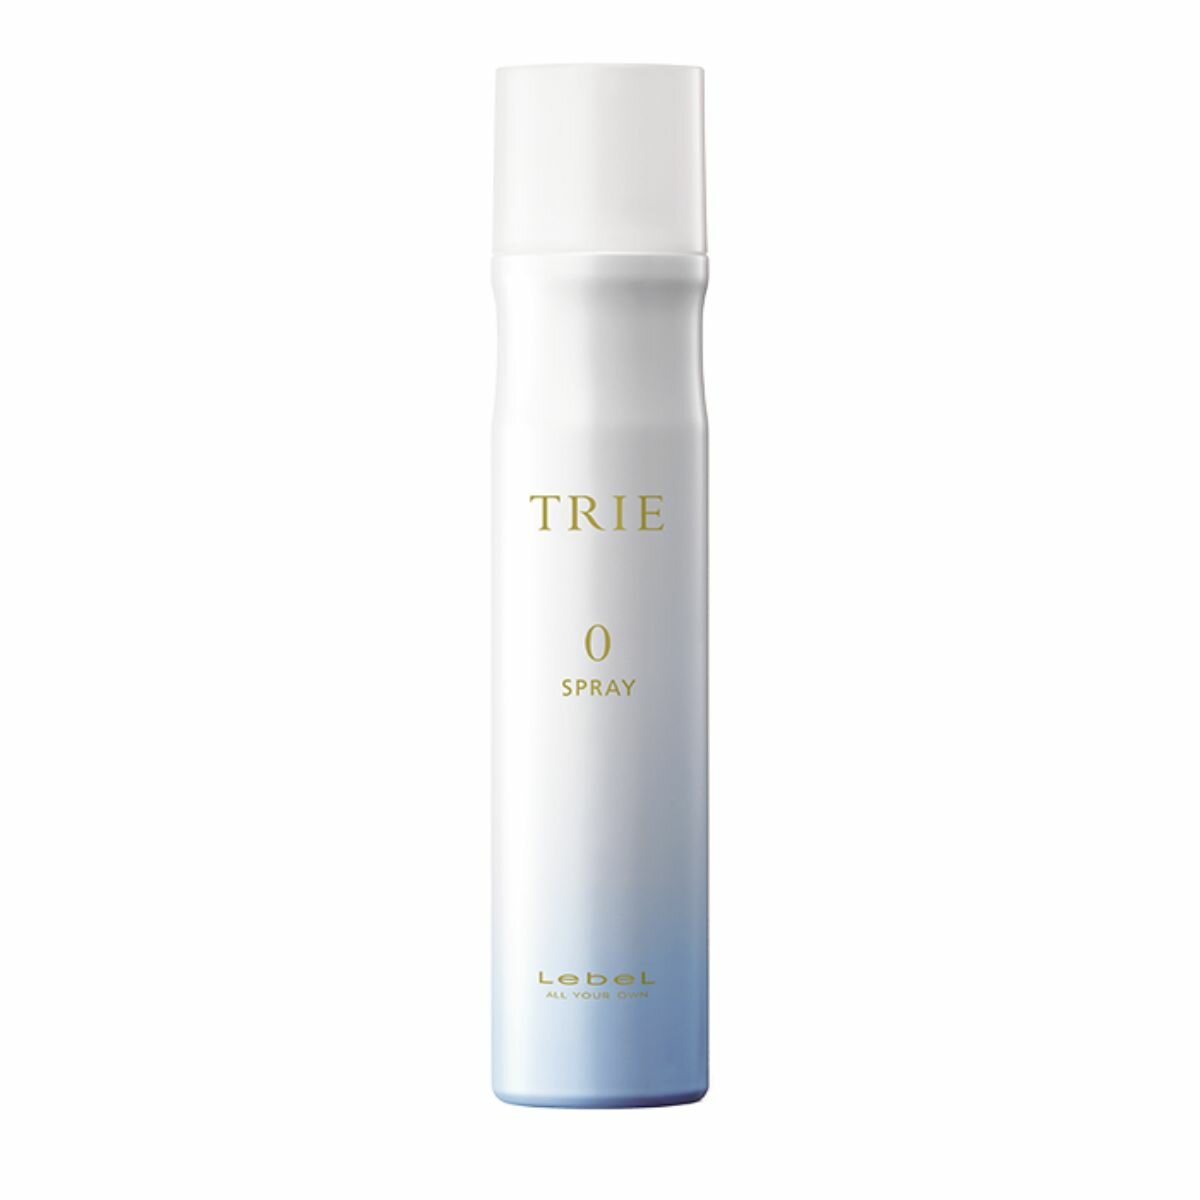 Lebel TRIE Spray 0 - Полирующий спрей-уход для гладкости волос 170 гр